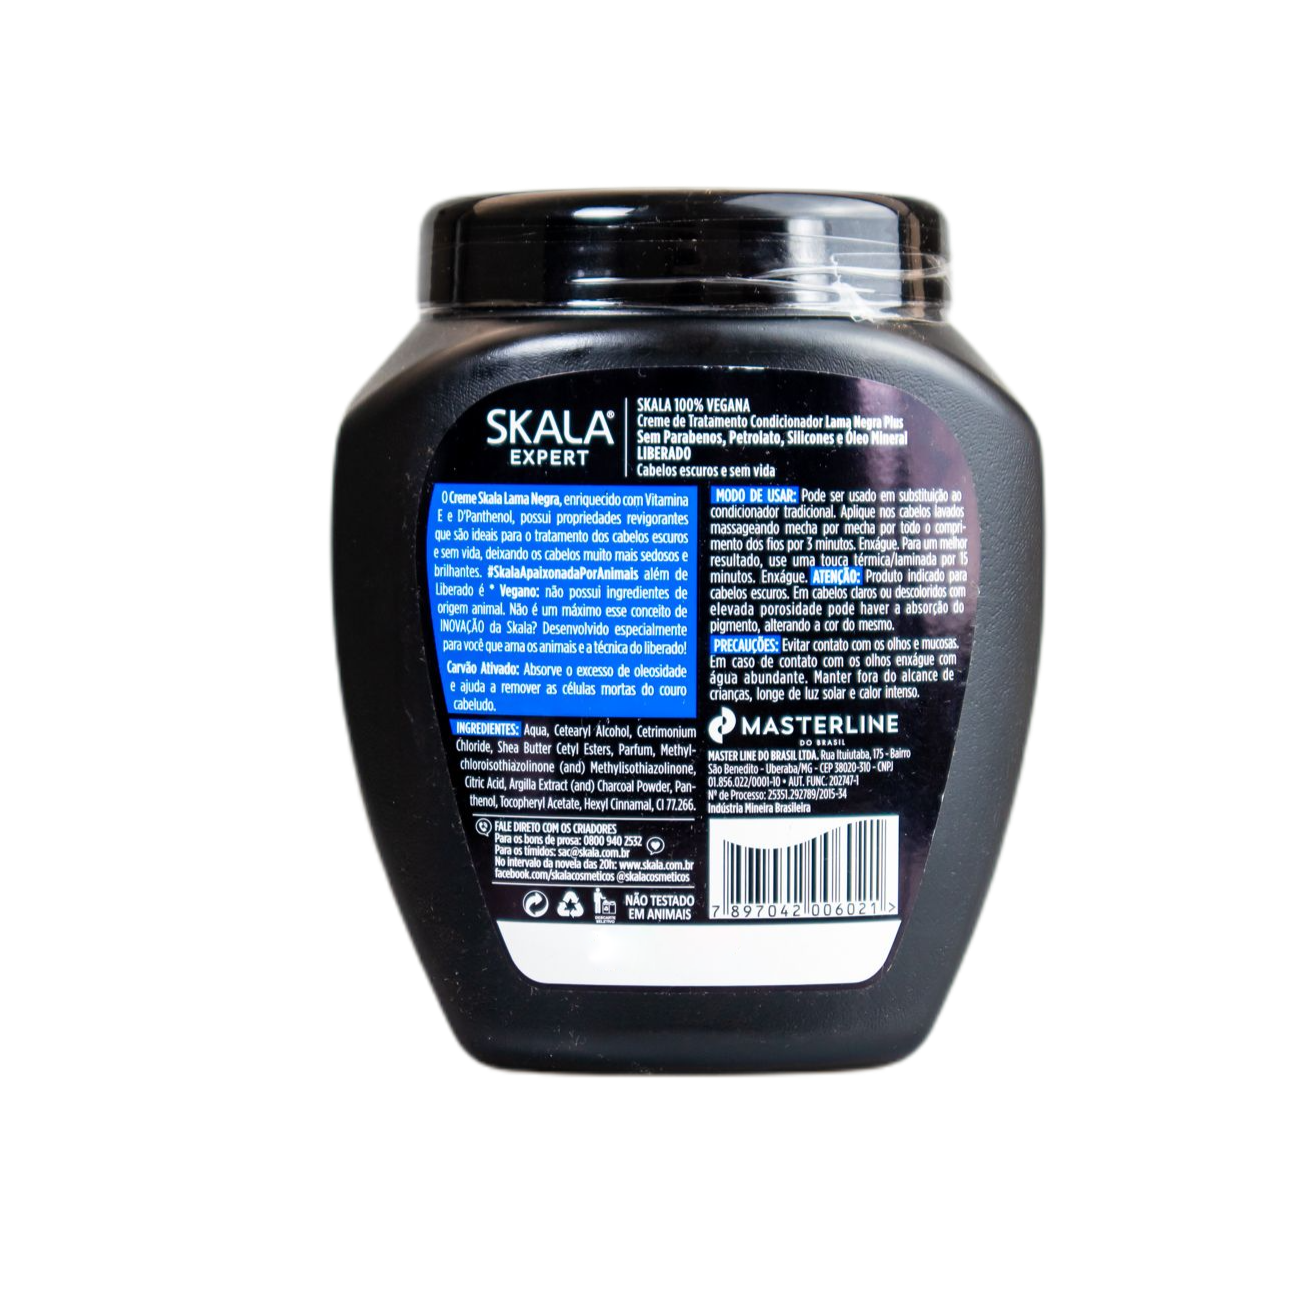 Skala Treatment Cream Creme De Tratamento Lama Negra / Cream Black Mud Treatment Hair Treatment Cream - Skala